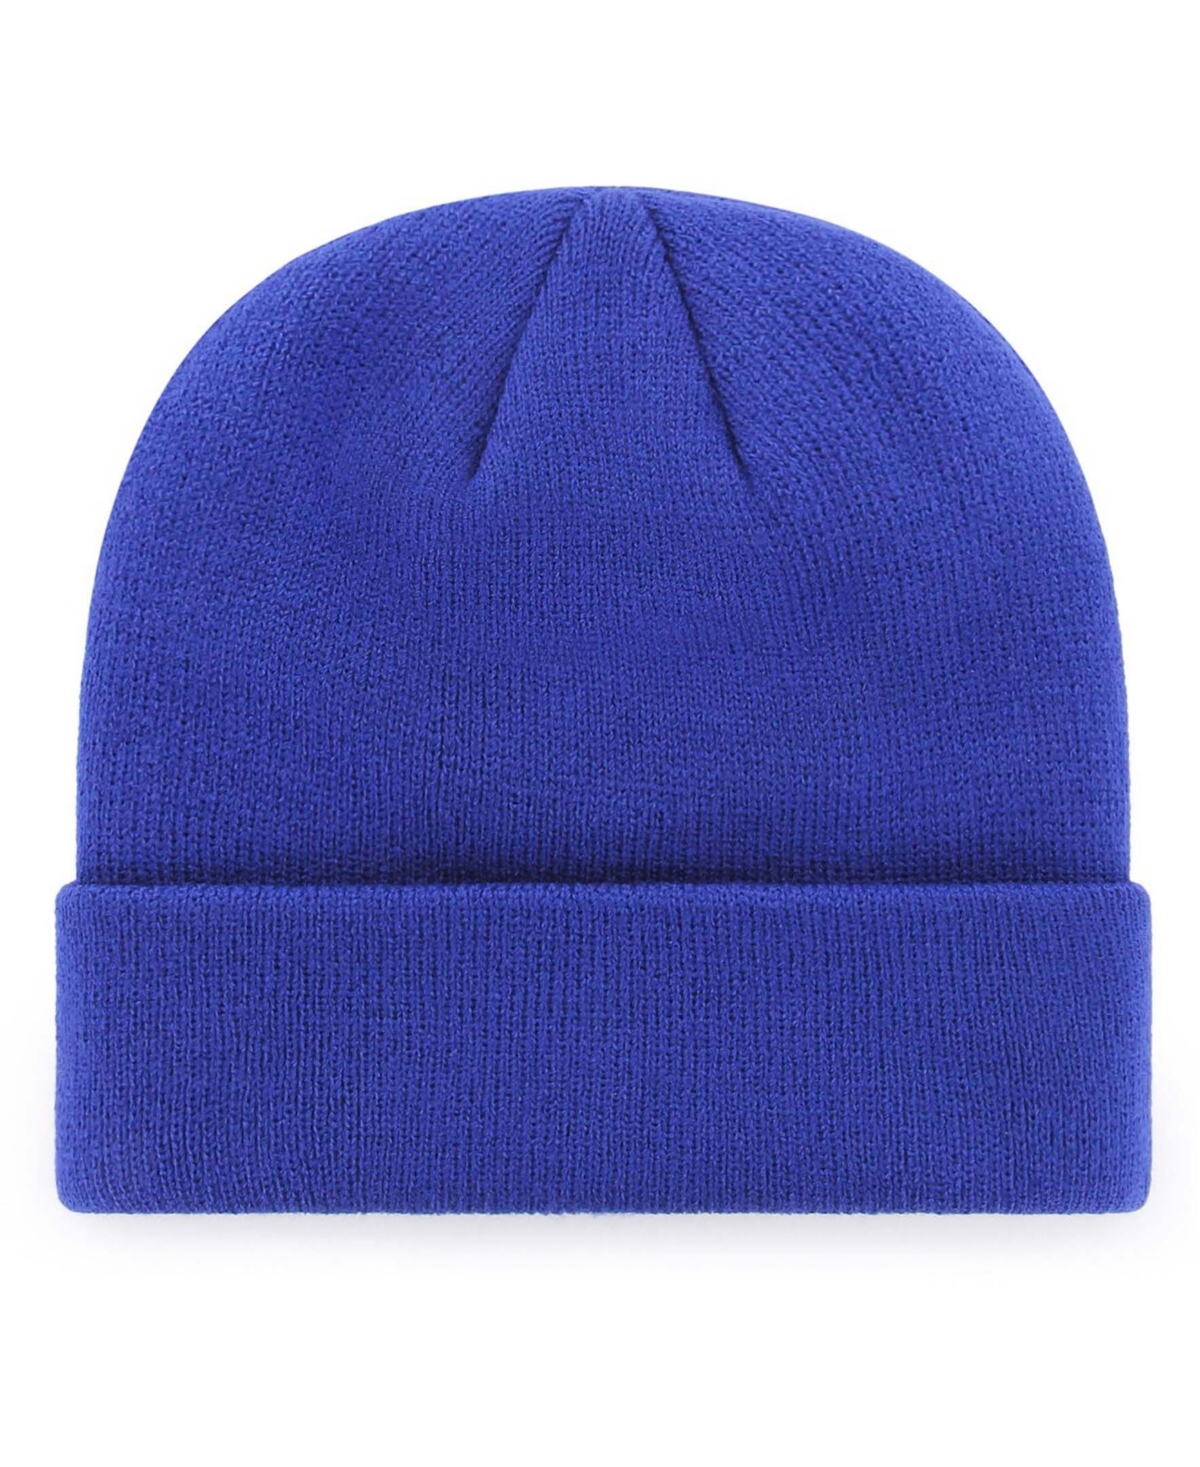 Shop 47 Brand Boys Royal Buffalo Bills Basic Cuffed Knit Hat